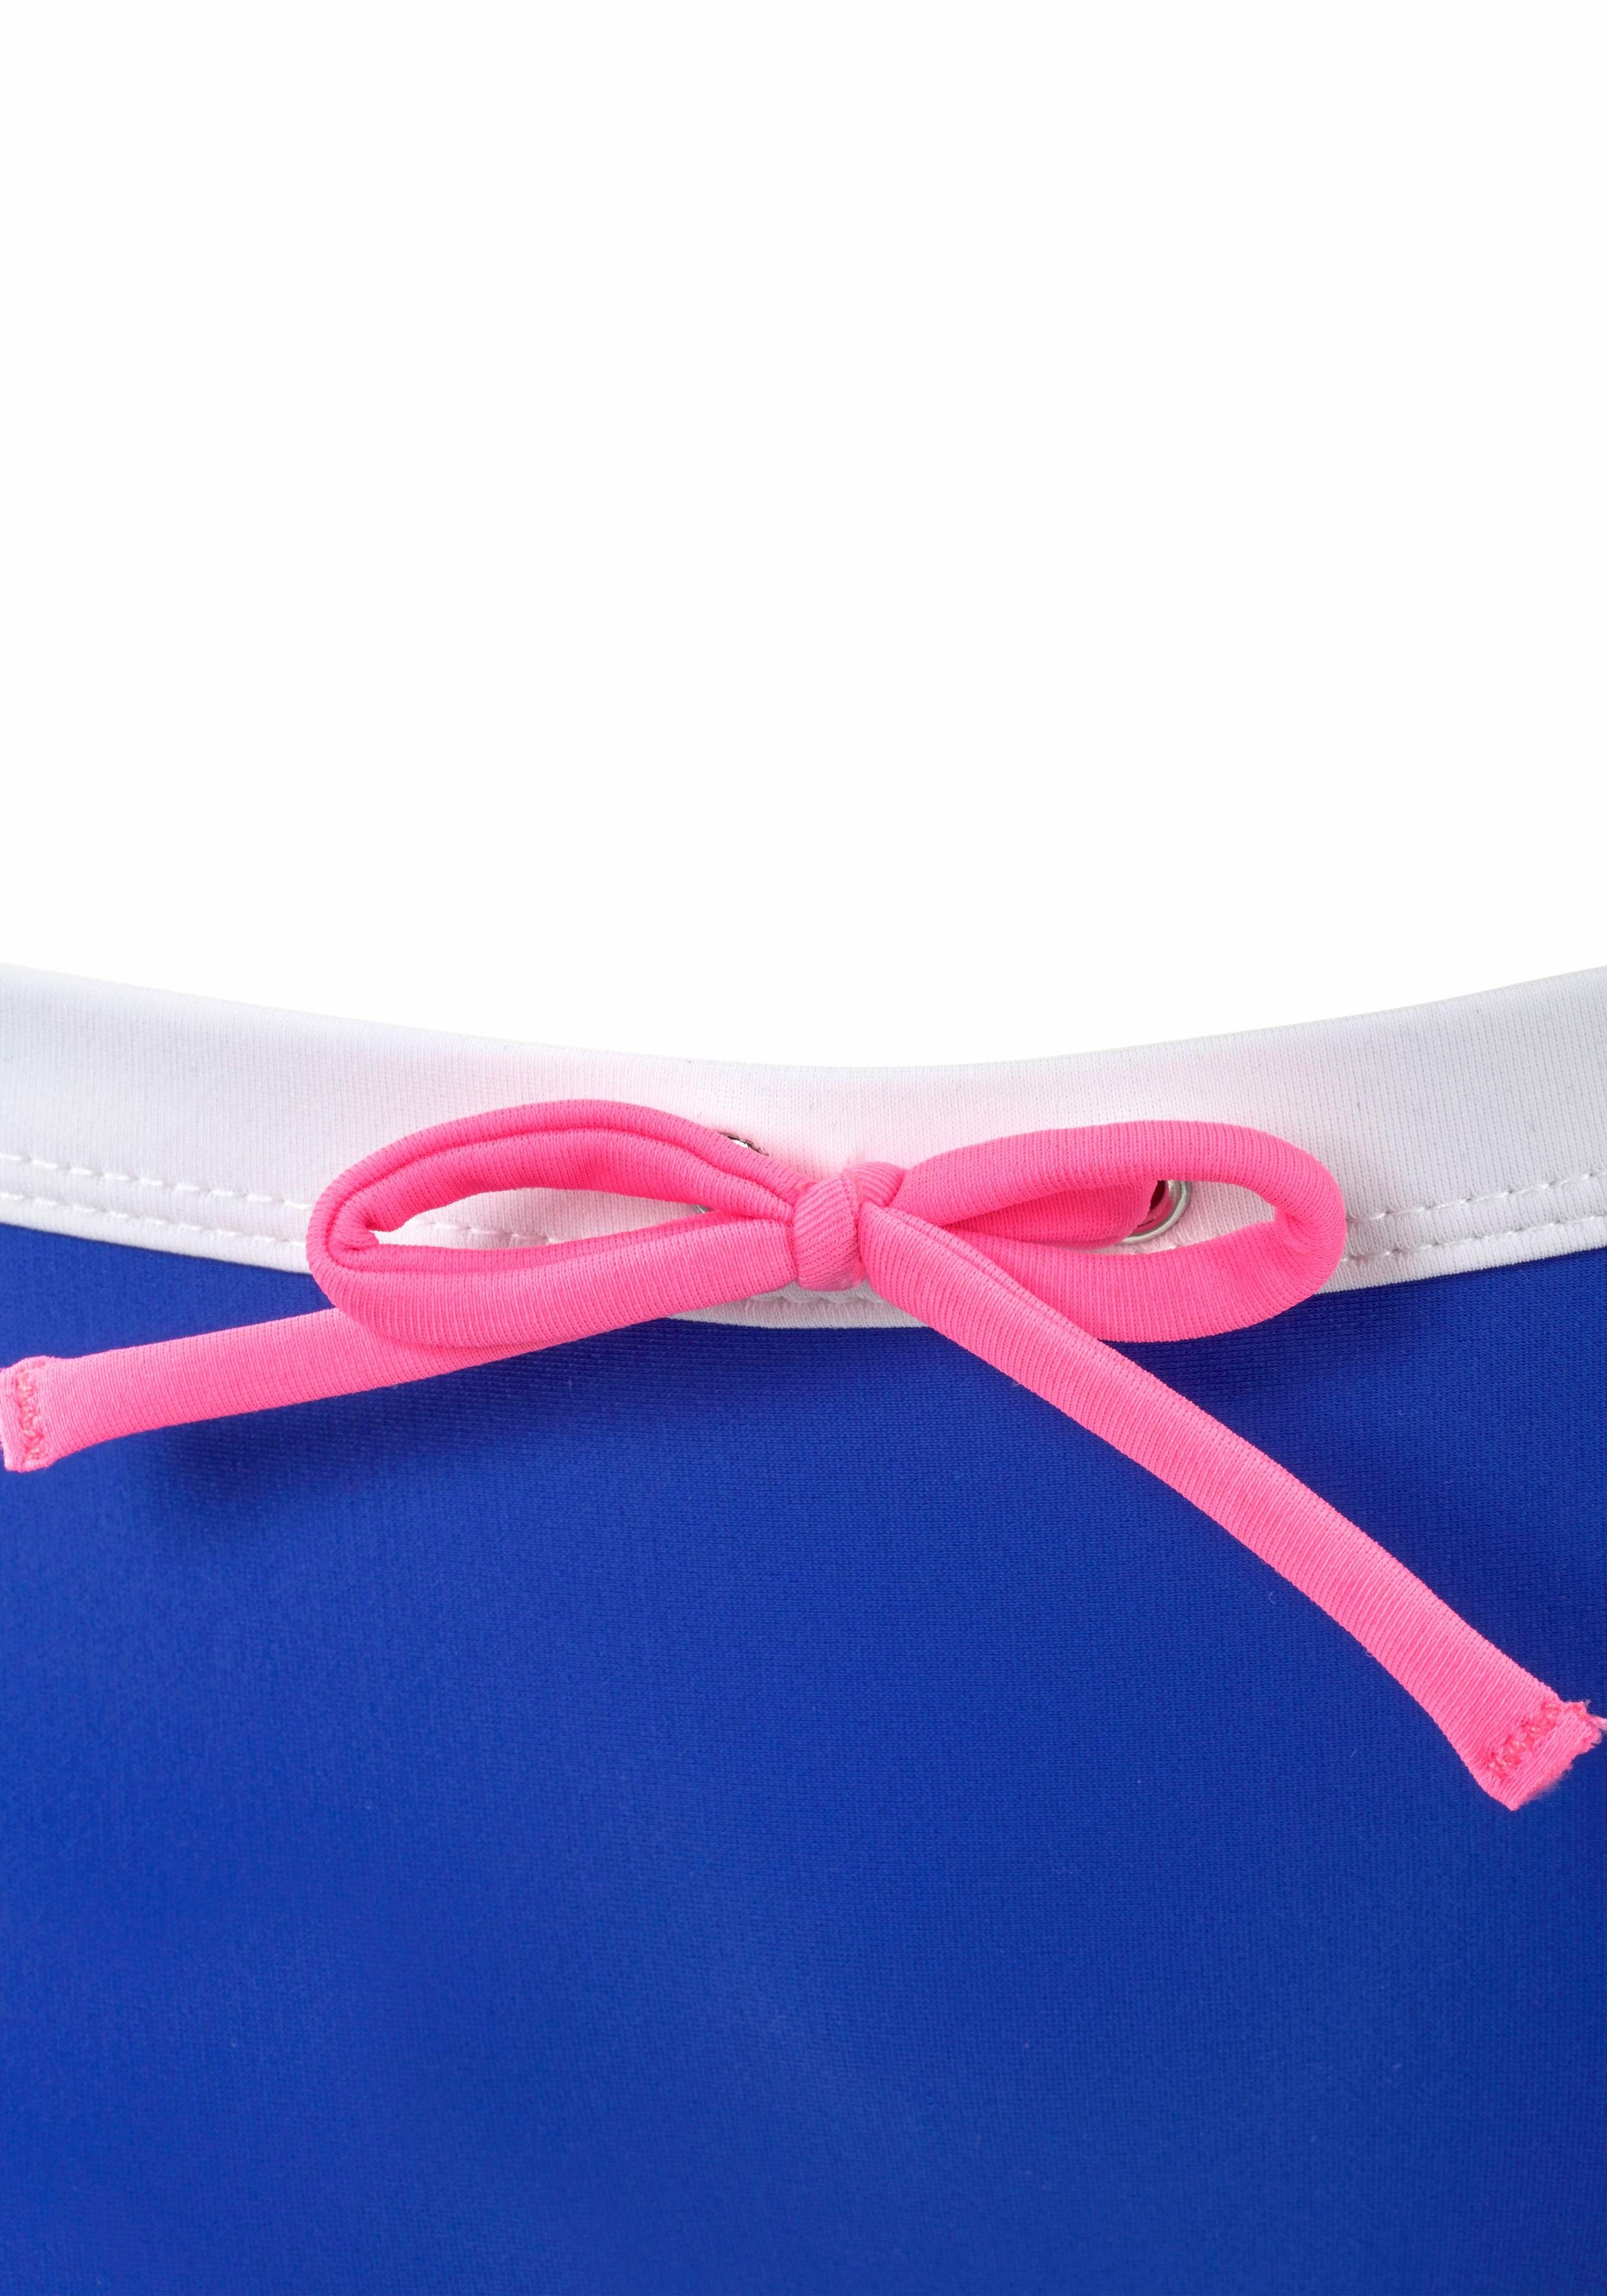 mit Bench. blau-pink Bustier-Bikini Kontrastdetails